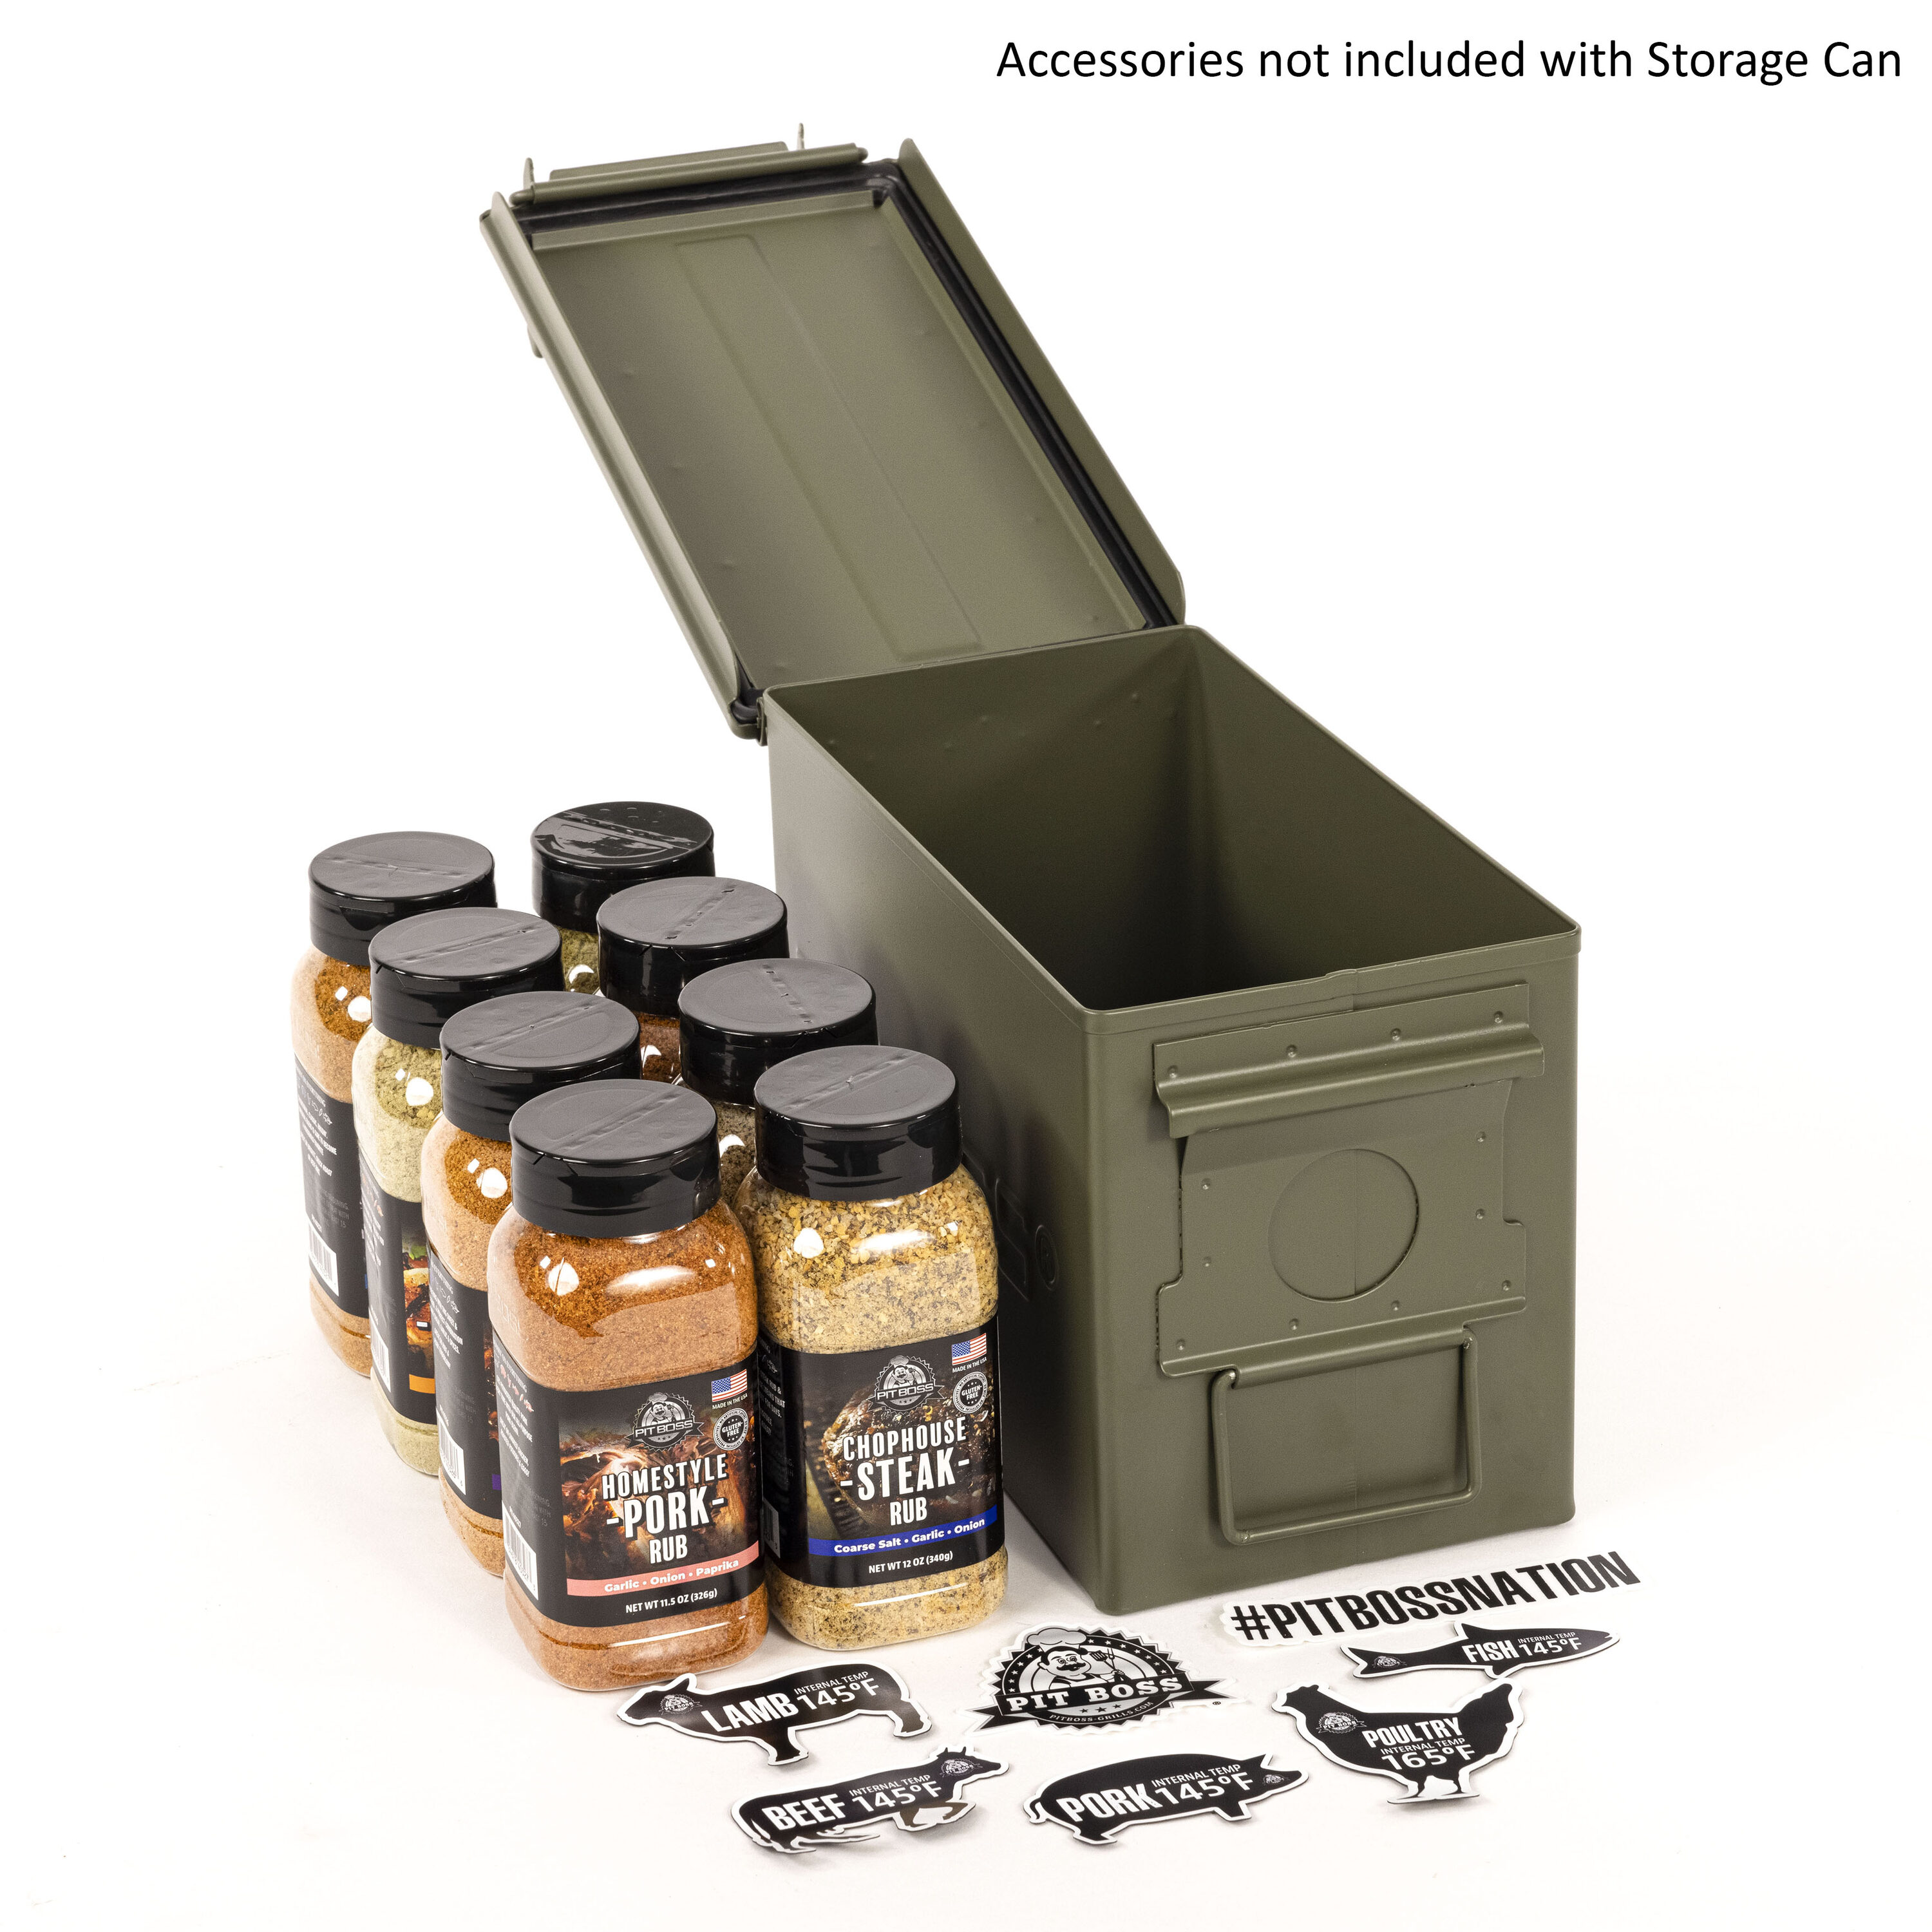 Shop Pit Boss Spices & Turkey Prep Standard Ammo Box Kit at